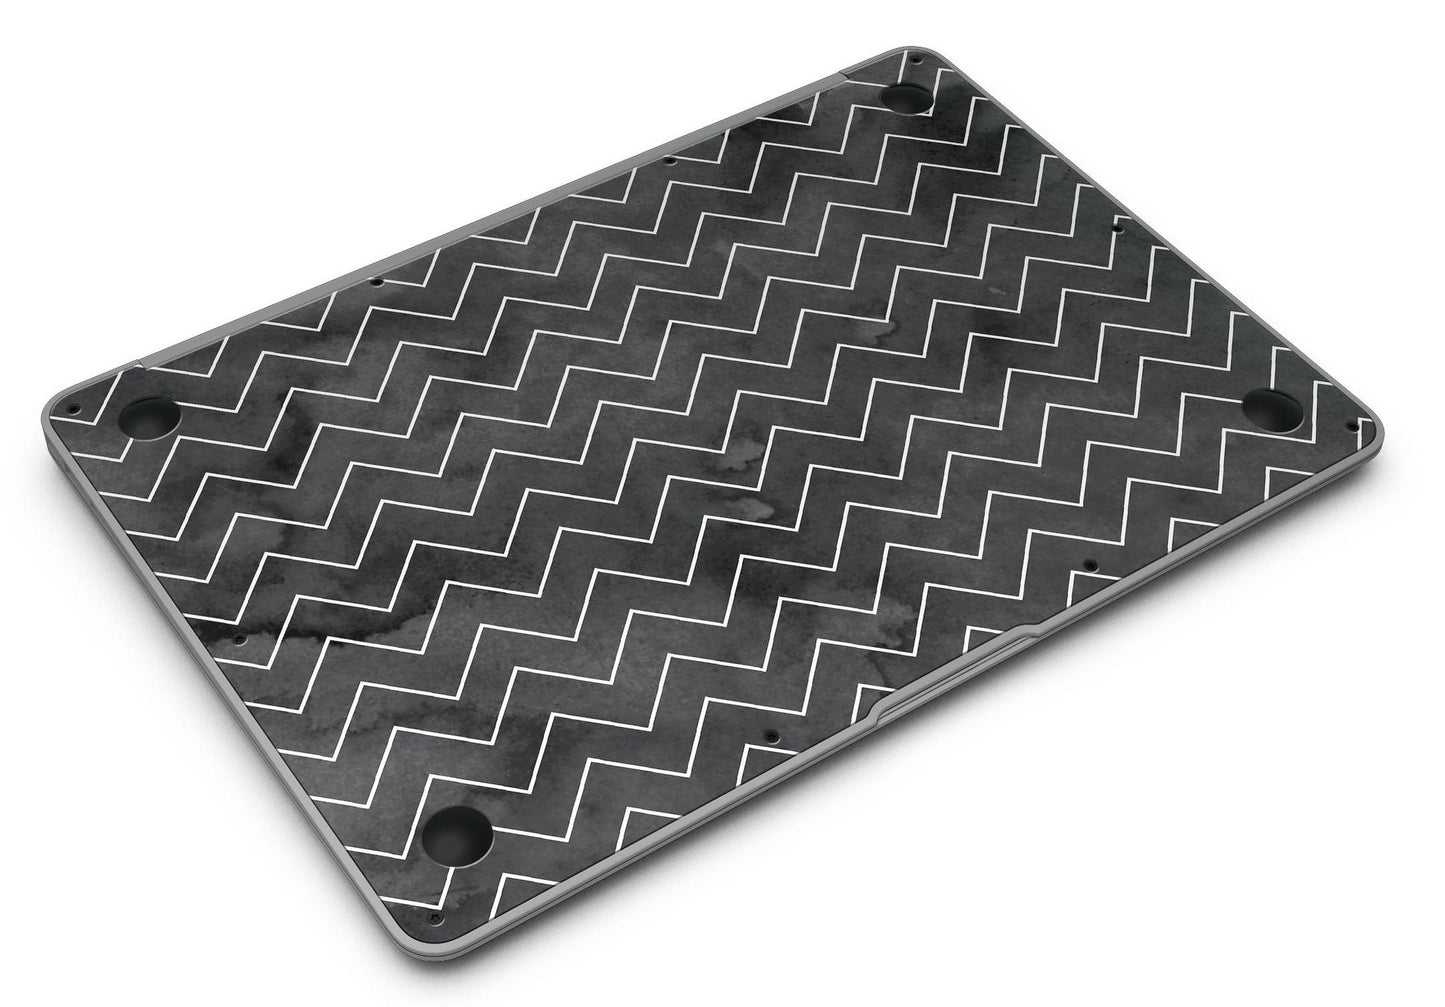 Black Watercolor with White Chevron - MacBook Air Skin Kit